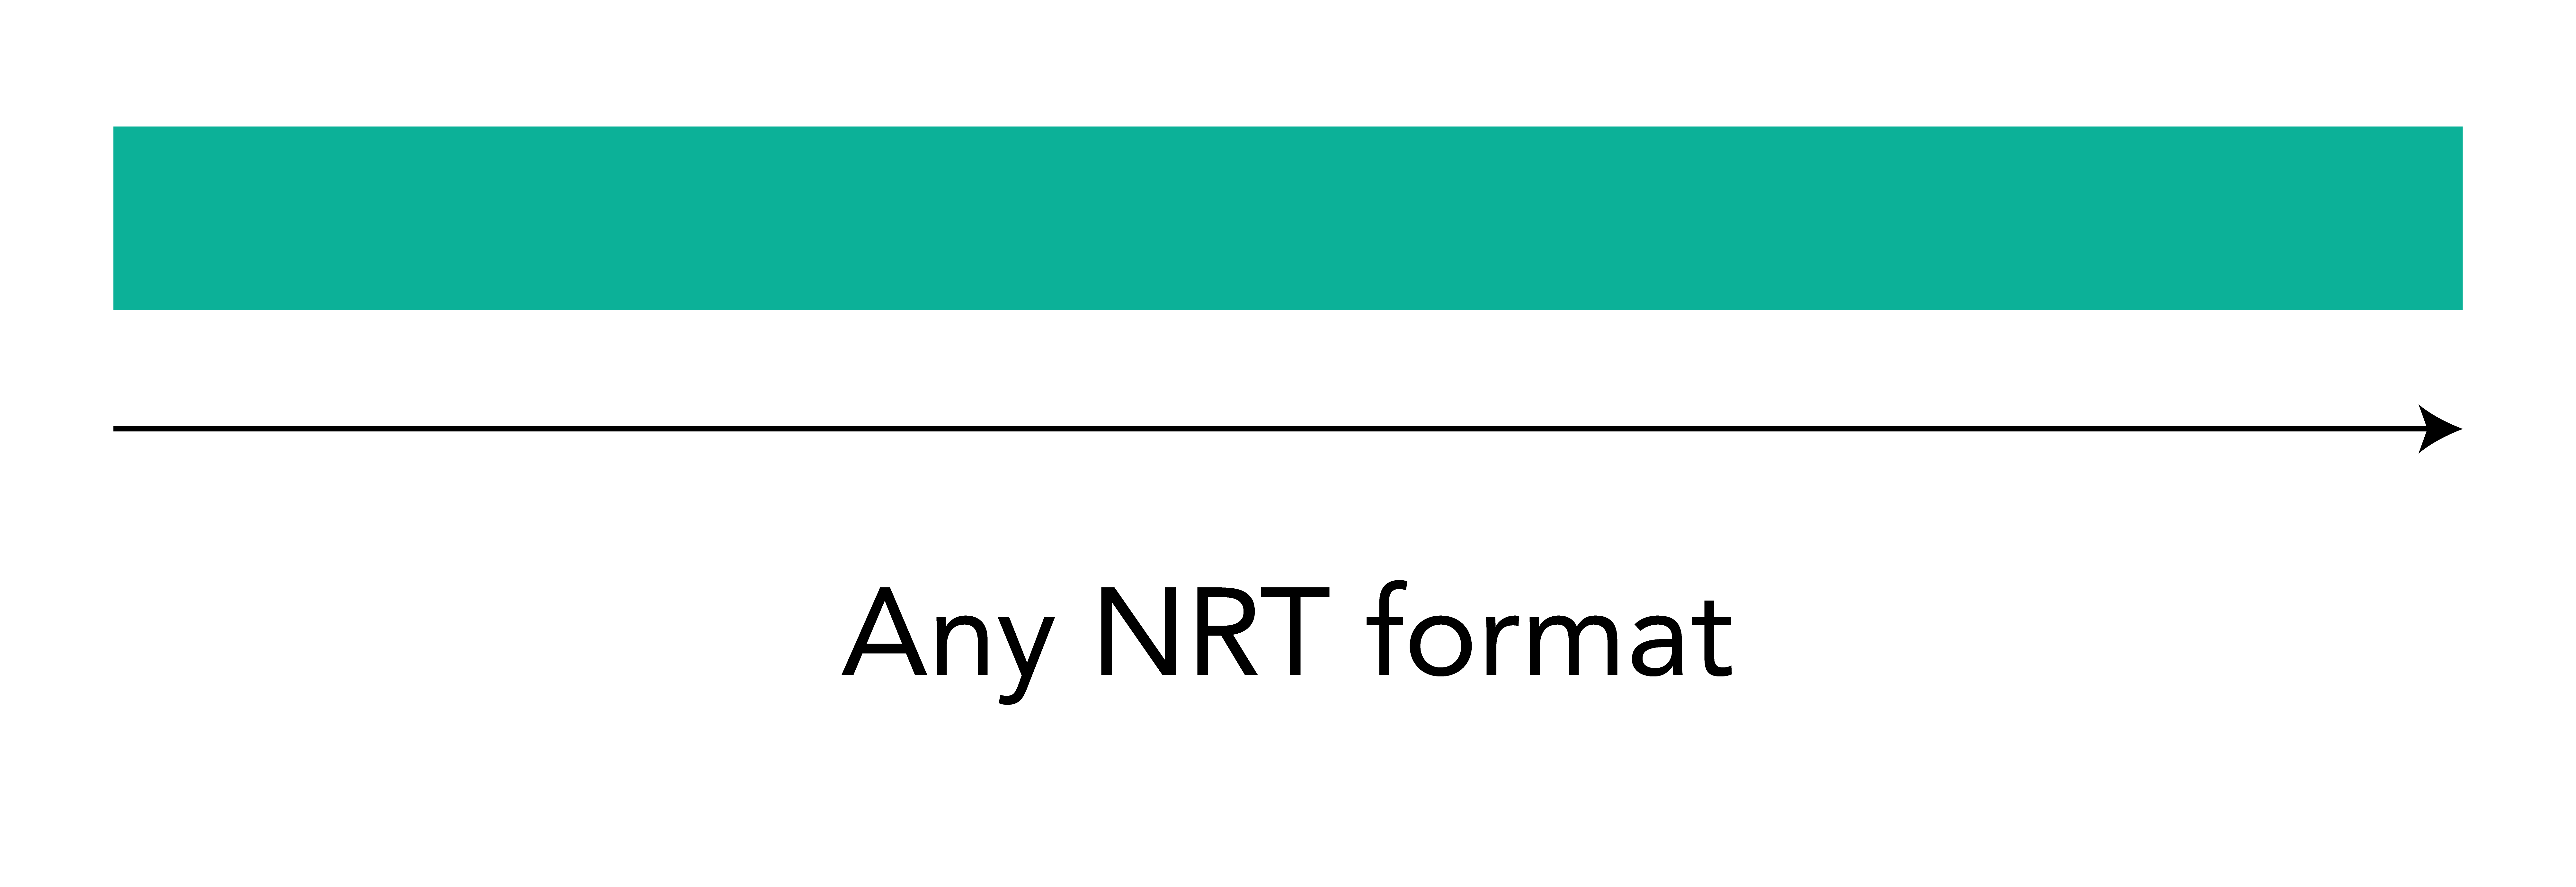 Any NRT format chart